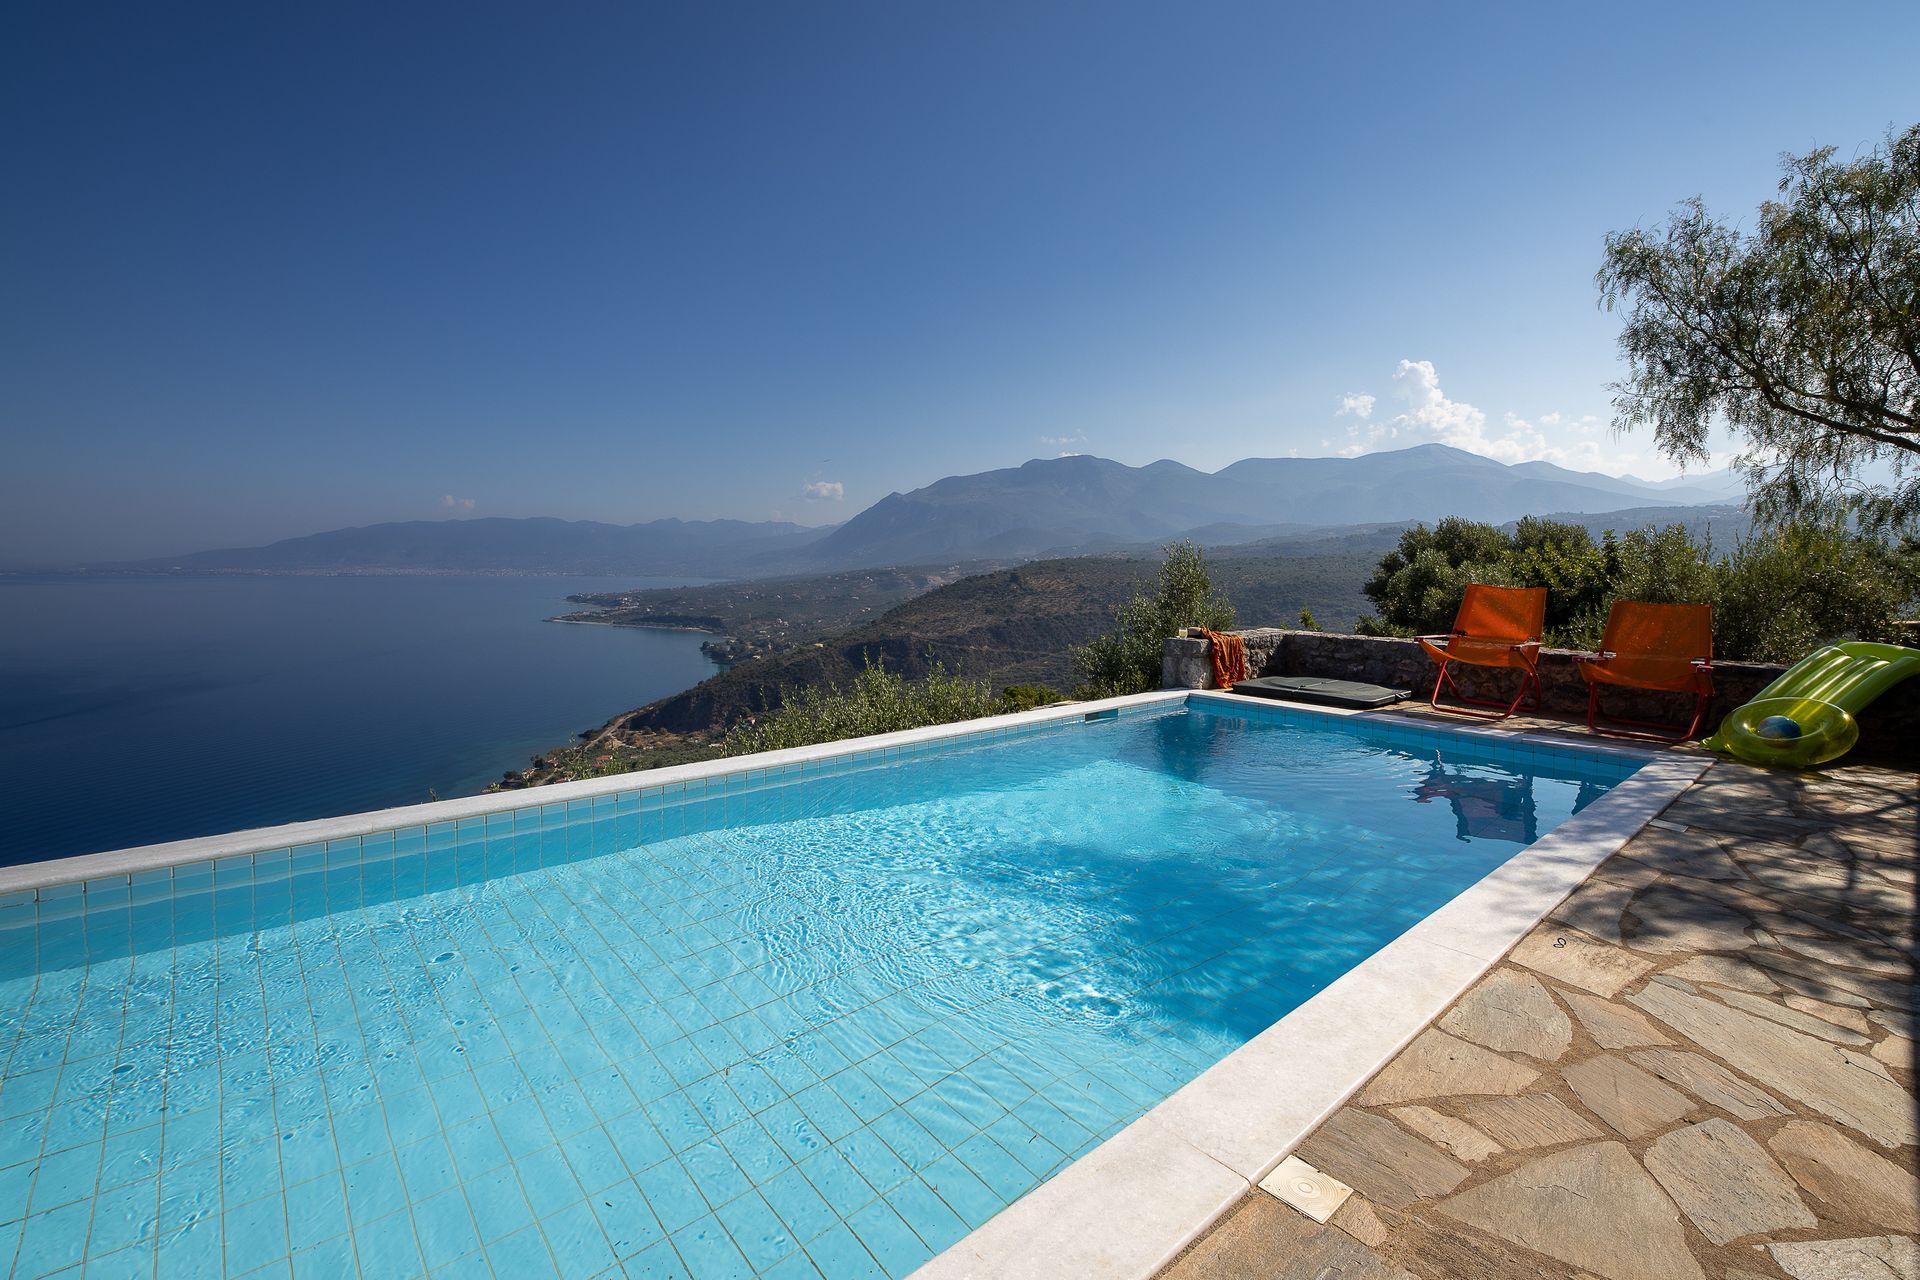 Searocks Exclusive Villas Resort - Κιτριές, Μεσσηνία ✦ 3 Ημέρες (2 Διανυκτερεύσεις) ✦ 4 άτομα ✦ 2 ✦ 21/04/2022 έως 30/09/2022 ✦ Early Check-In &amp; Late Check-Out κατόπιν διαθεσιμότητας!